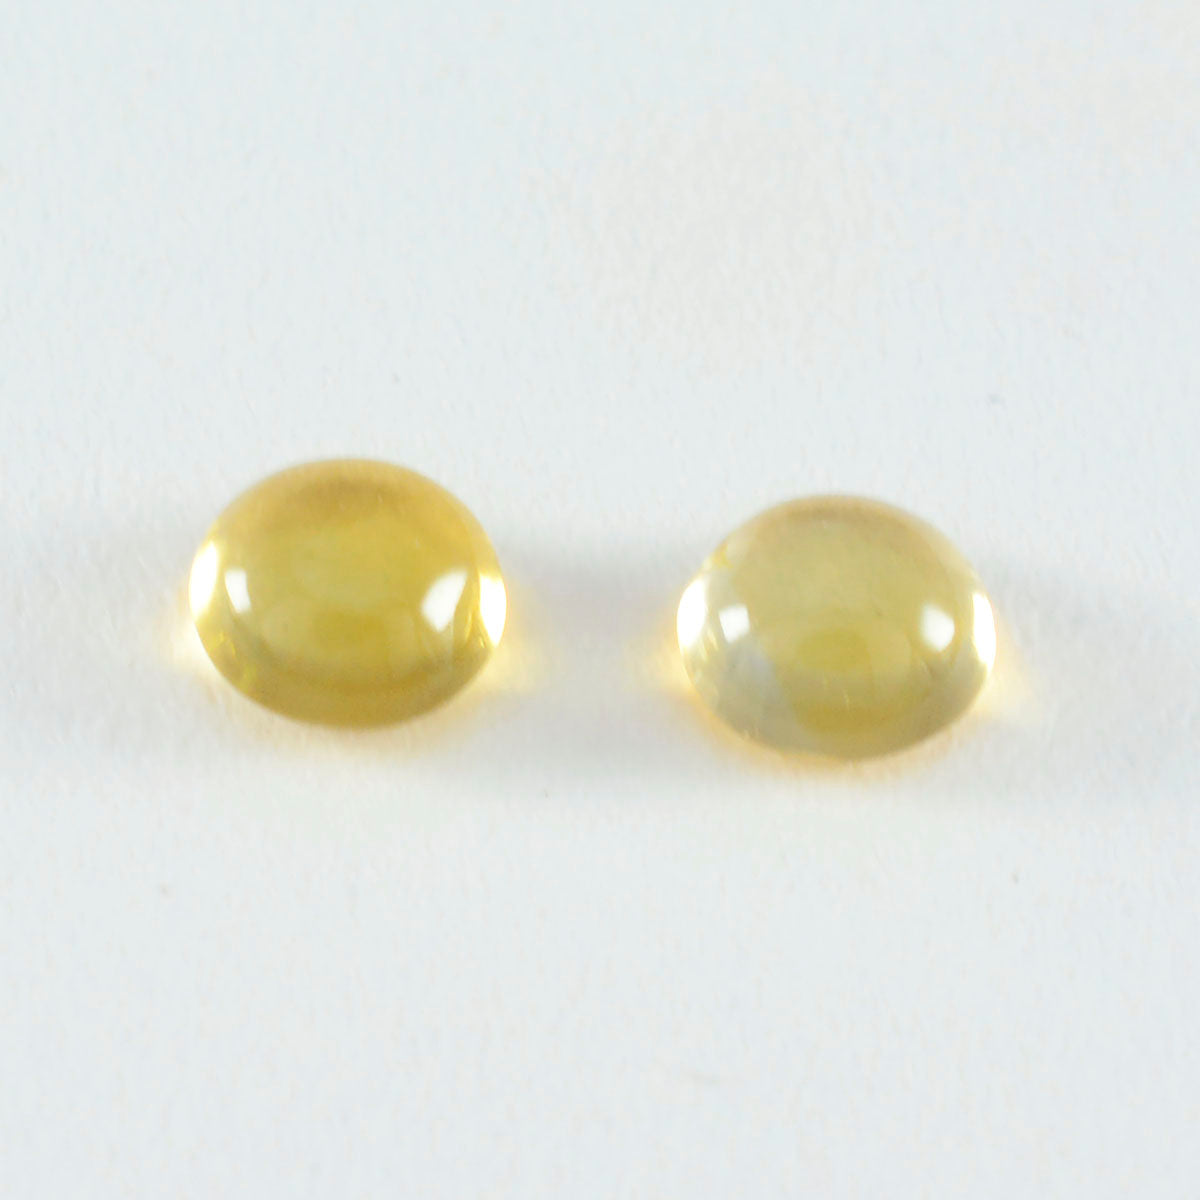 Riyogems 1PC Yellow Citrine Cabochon 13x13 mm Round Shape cute Quality Gems